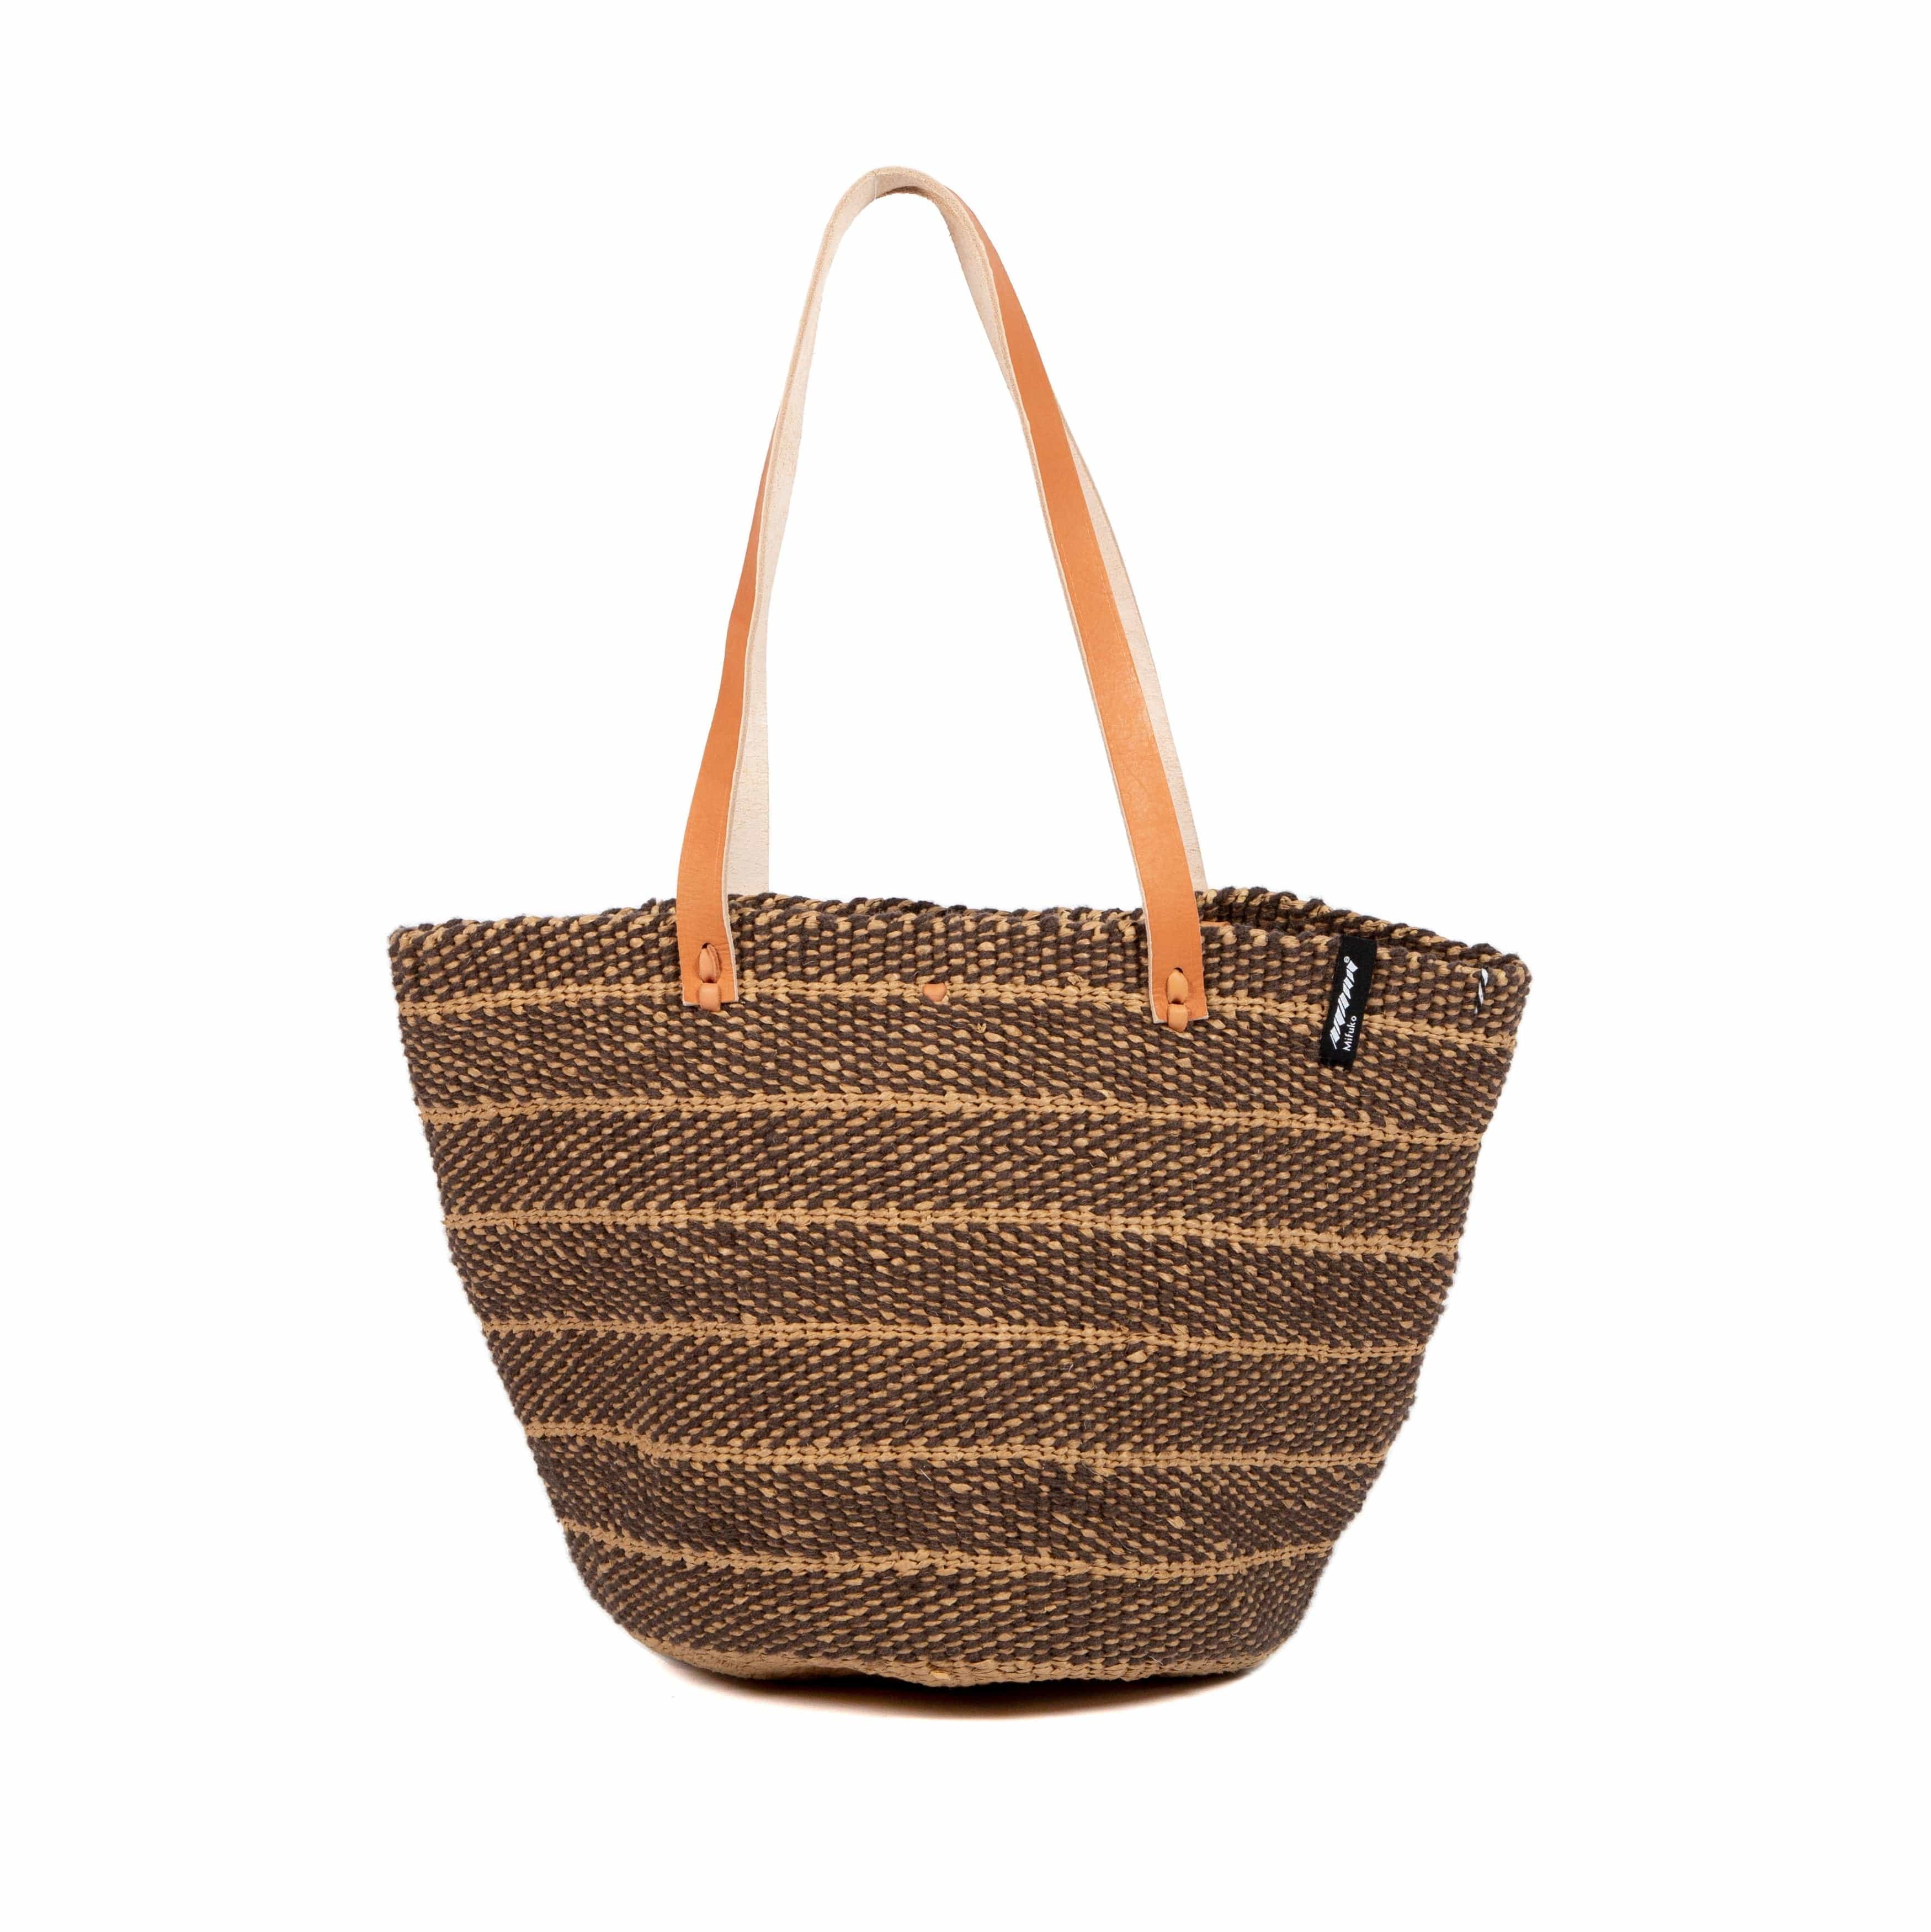 Mifuko Wool and paper Shopper basket Pamba shopper basket | Dark brown twill weave M